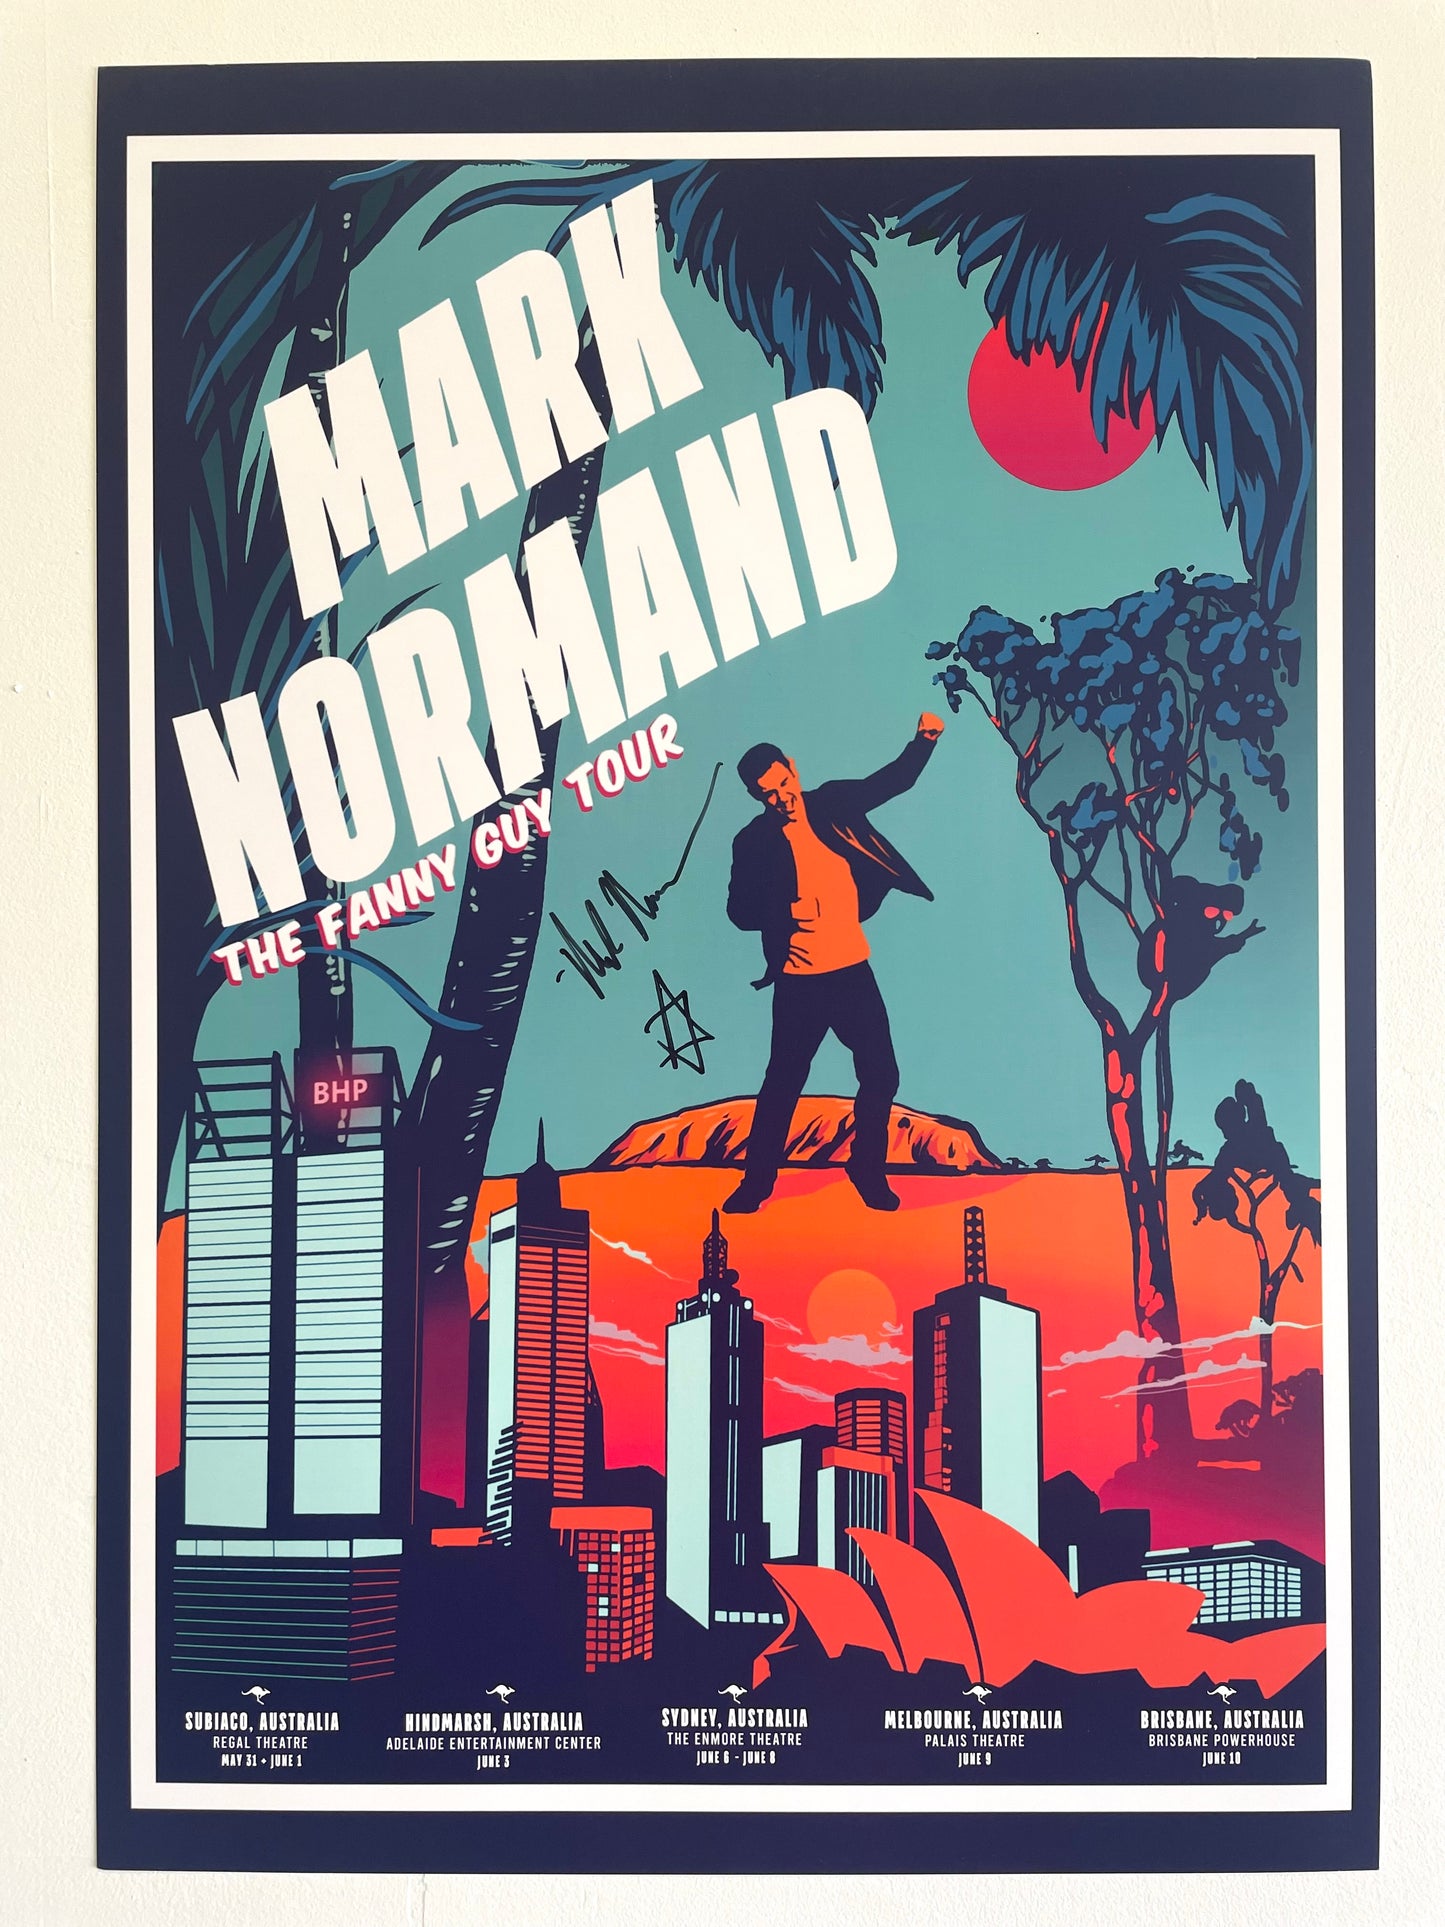 mark normand australia tour